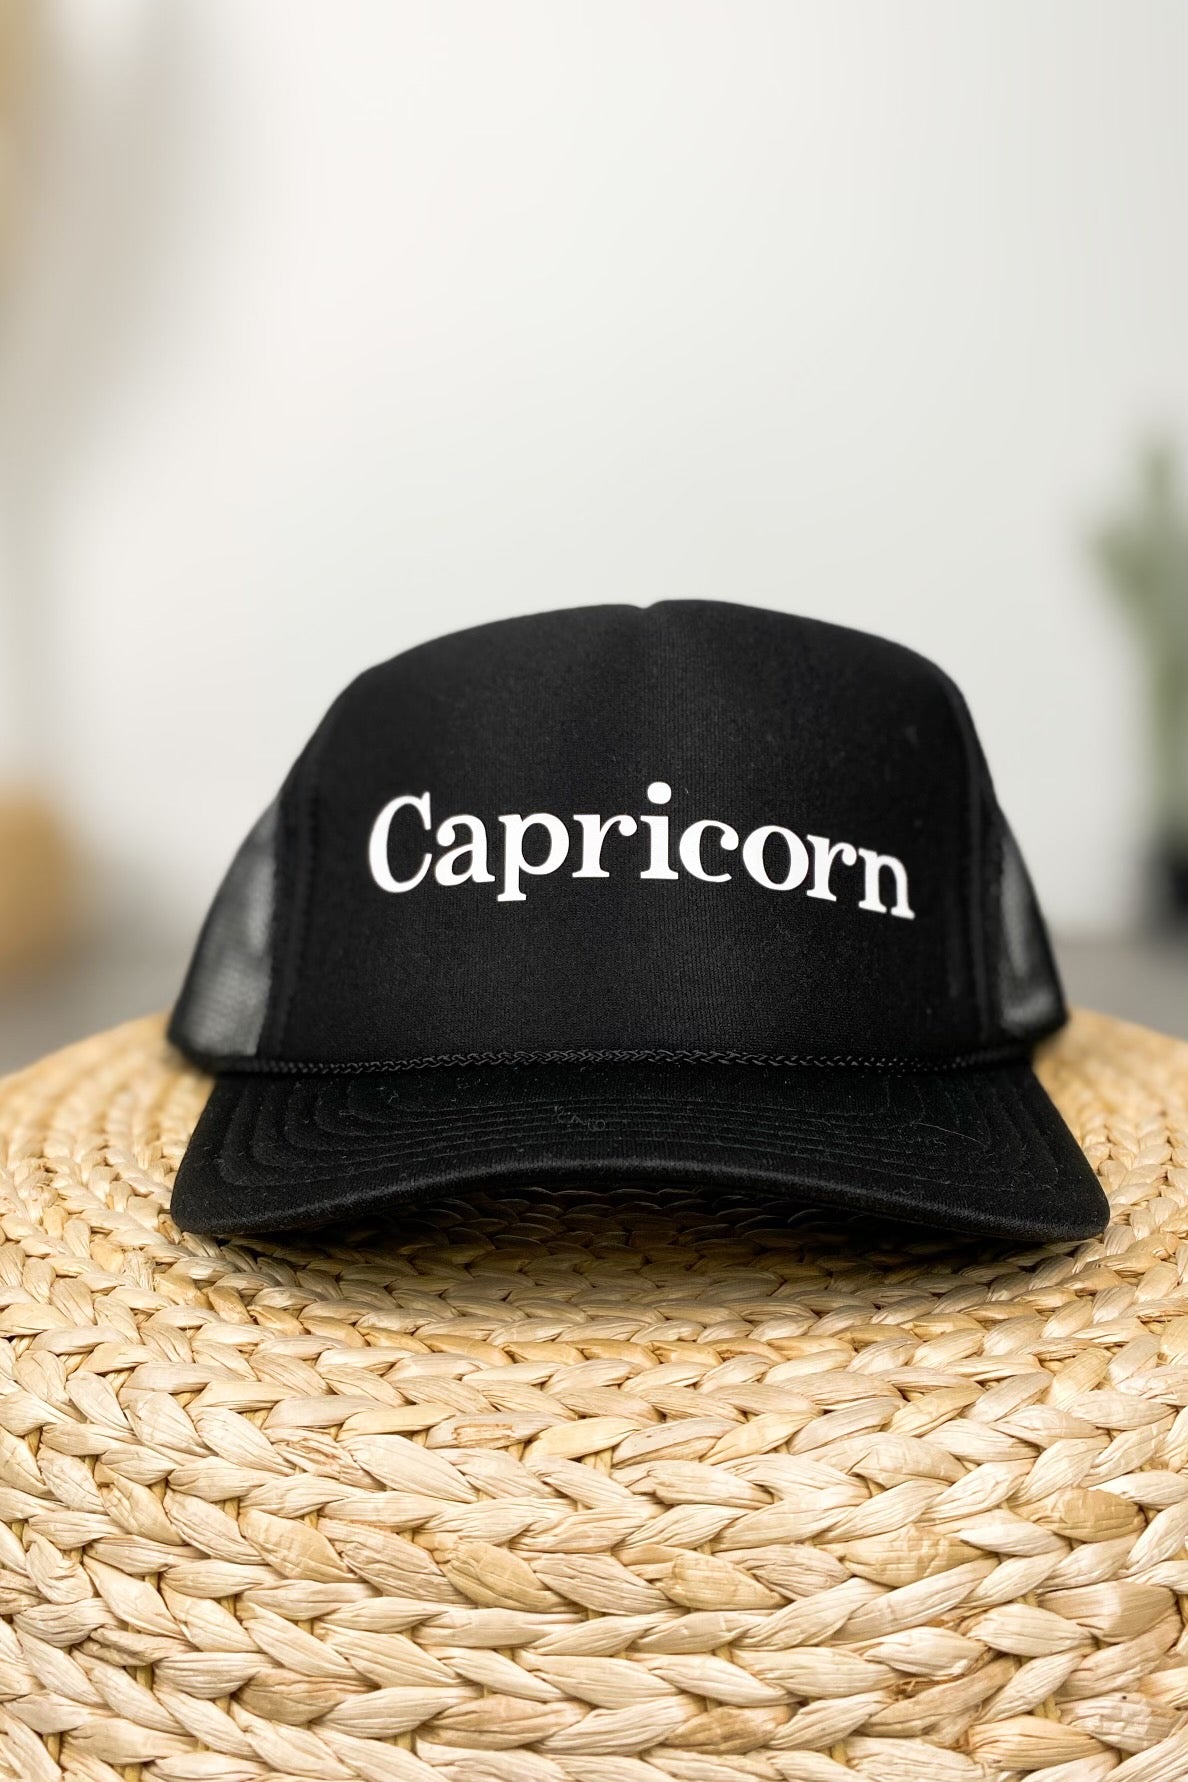 Capricorn trucker hat black - Trendy Hats at Lush Fashion Lounge Boutique in Oklahoma City